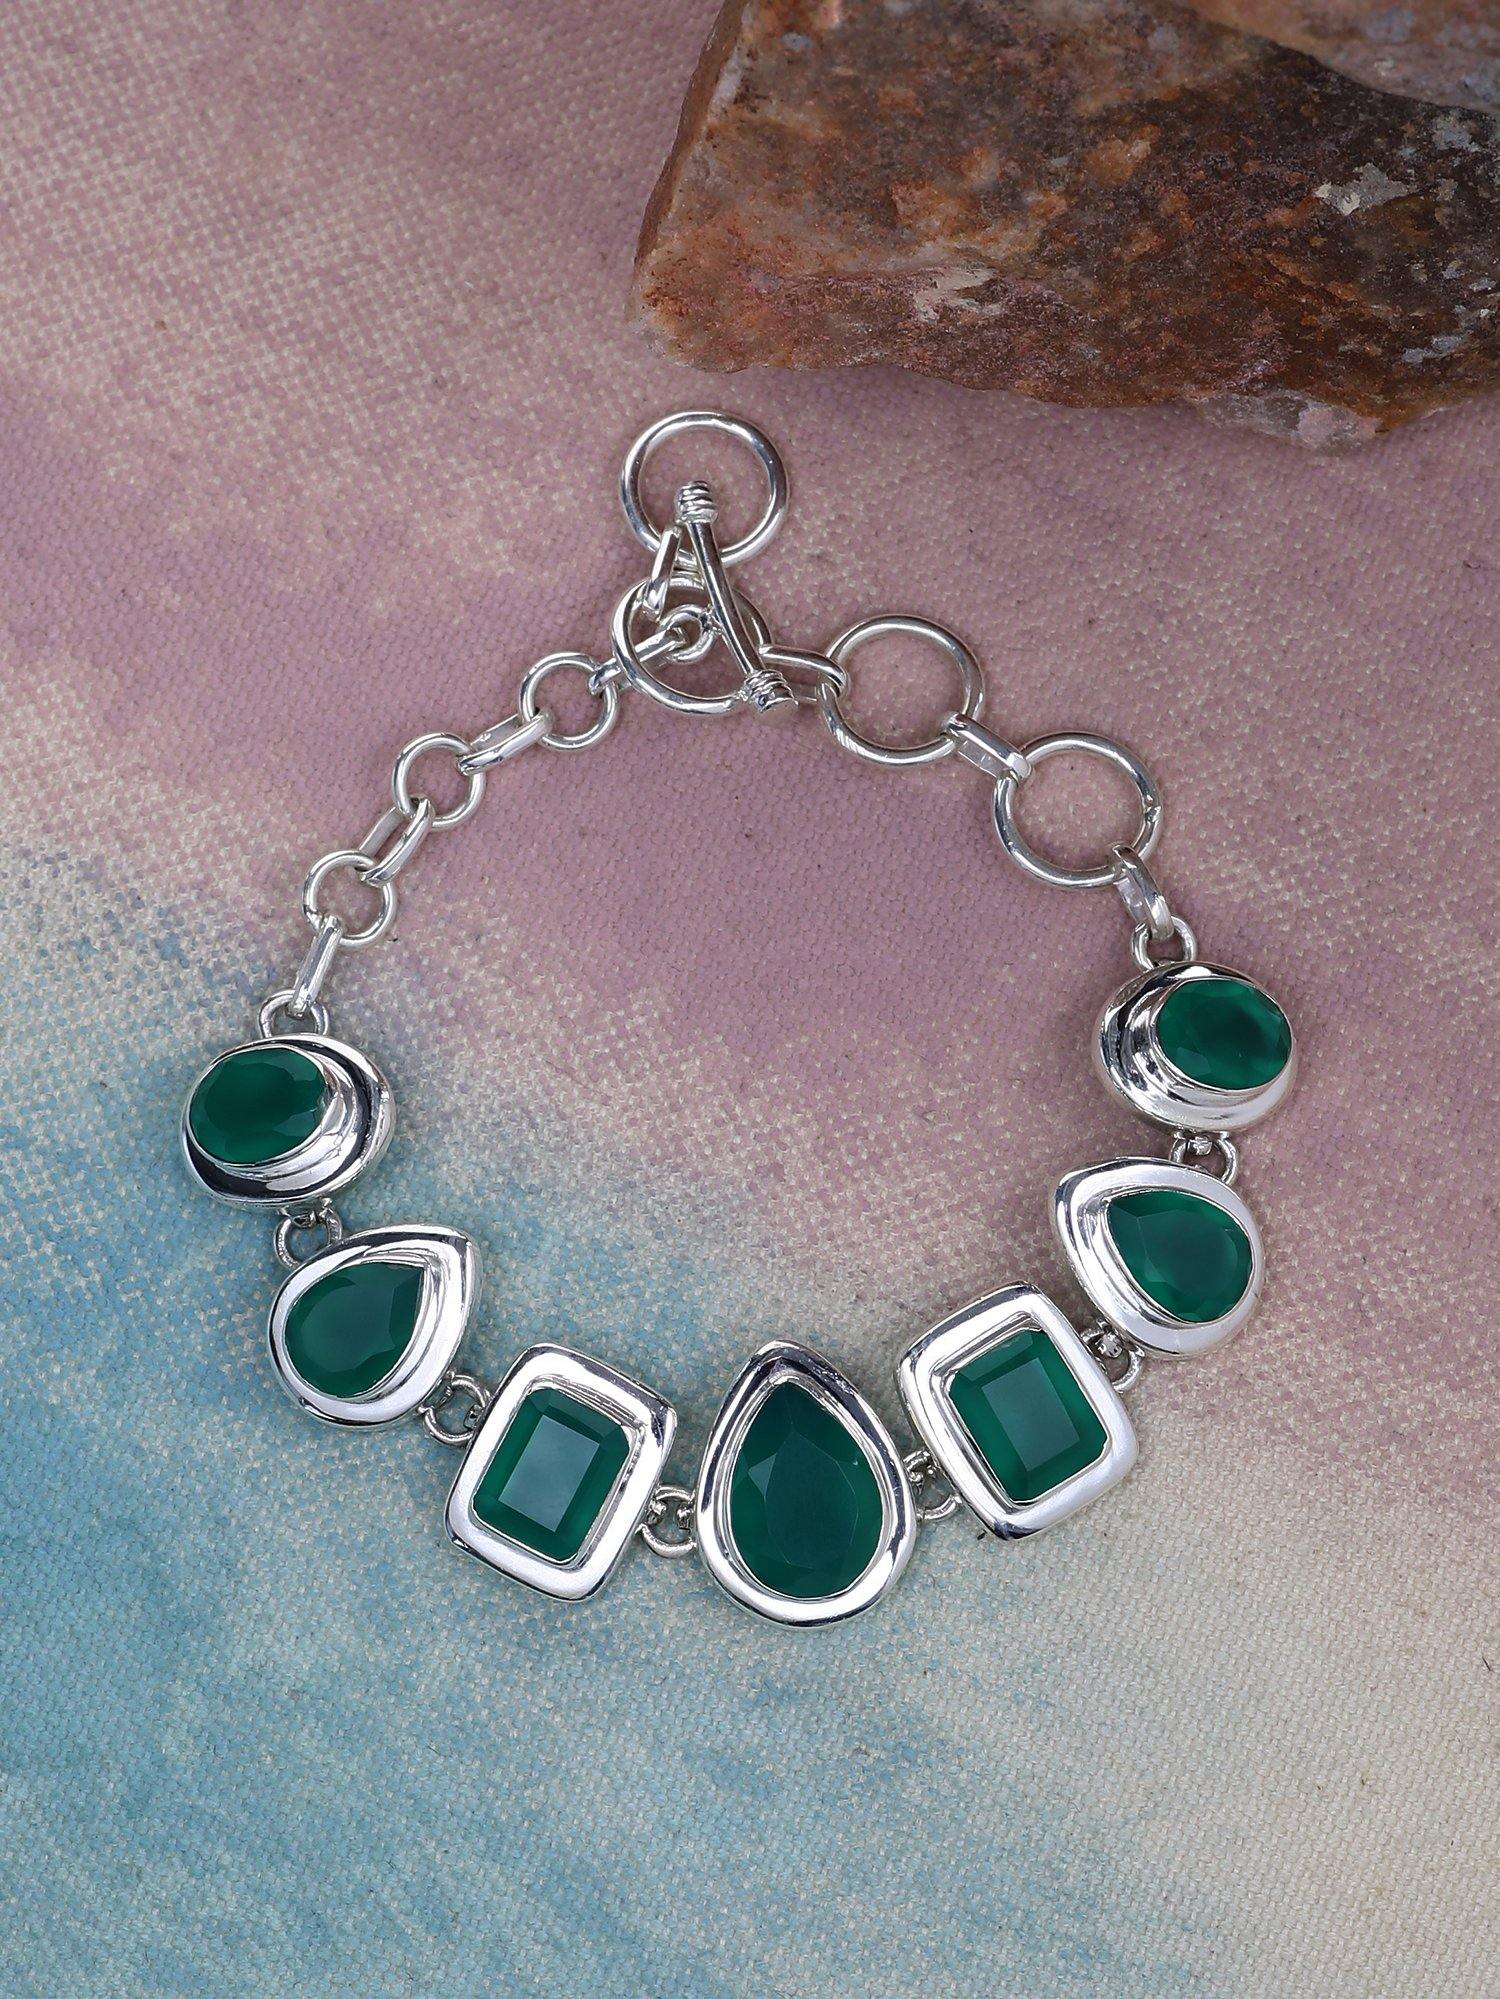 Green Onyx Solid 925 Sterling Silver Link Chain Bracelet Jewelry - YoTreasure